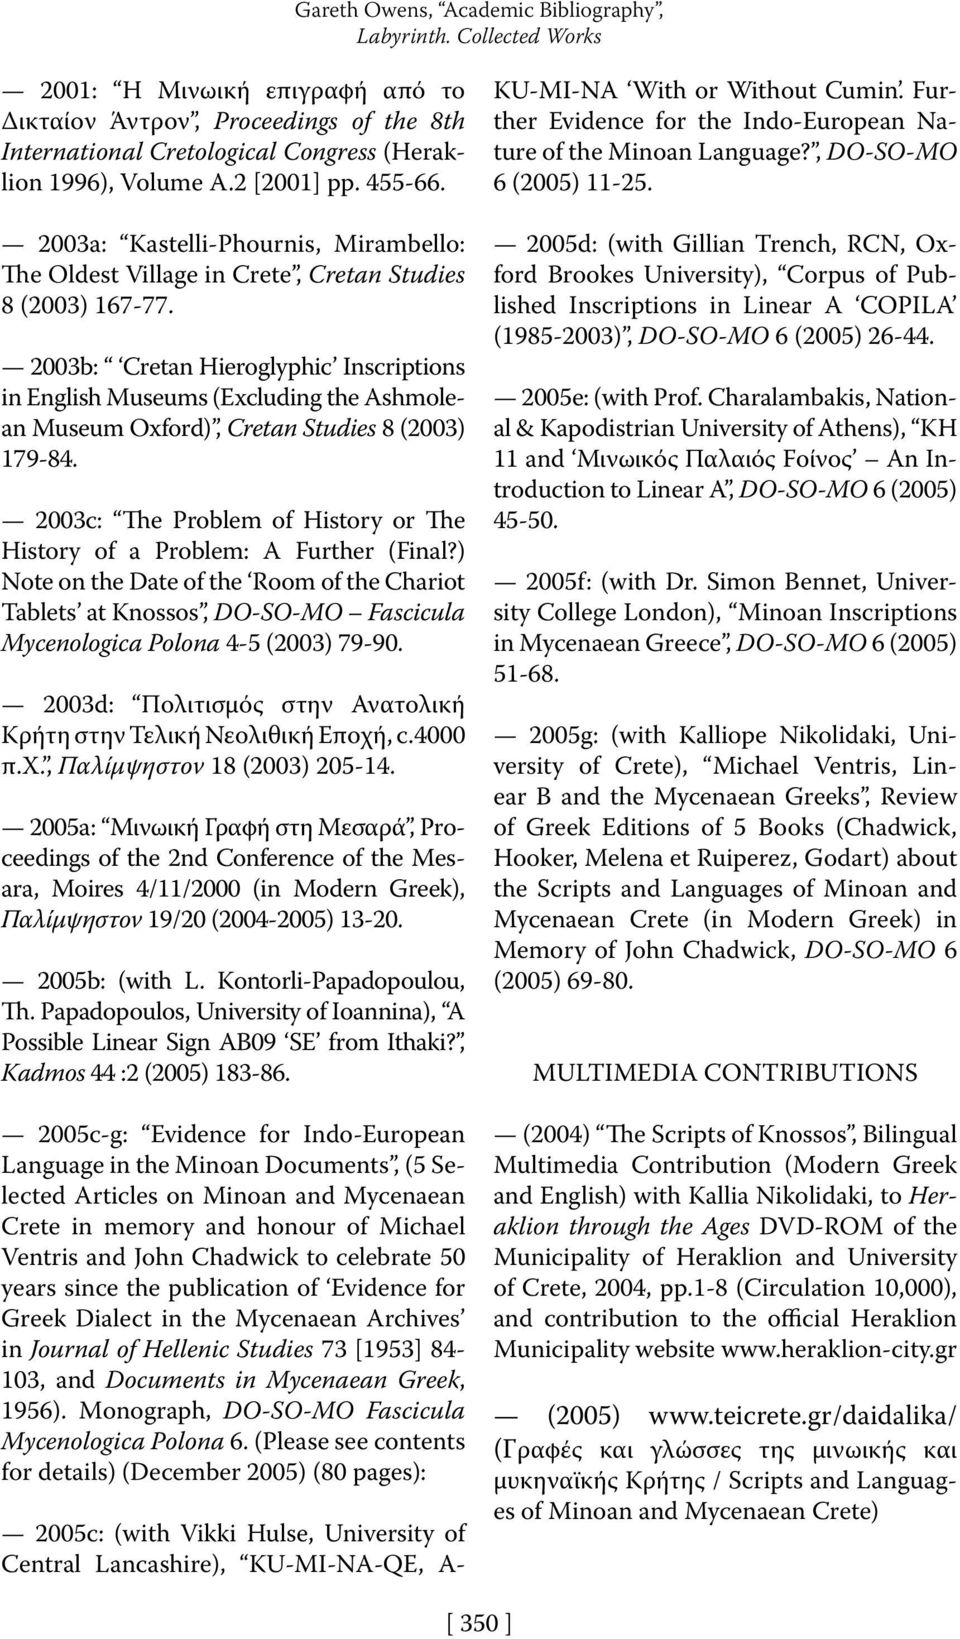 2003b: Cretan Hieroglyphic Inscriptions in English Museums (Excluding the Ashmolean Museum Oxford), Cretan Studies 8 (2003) 179-84.